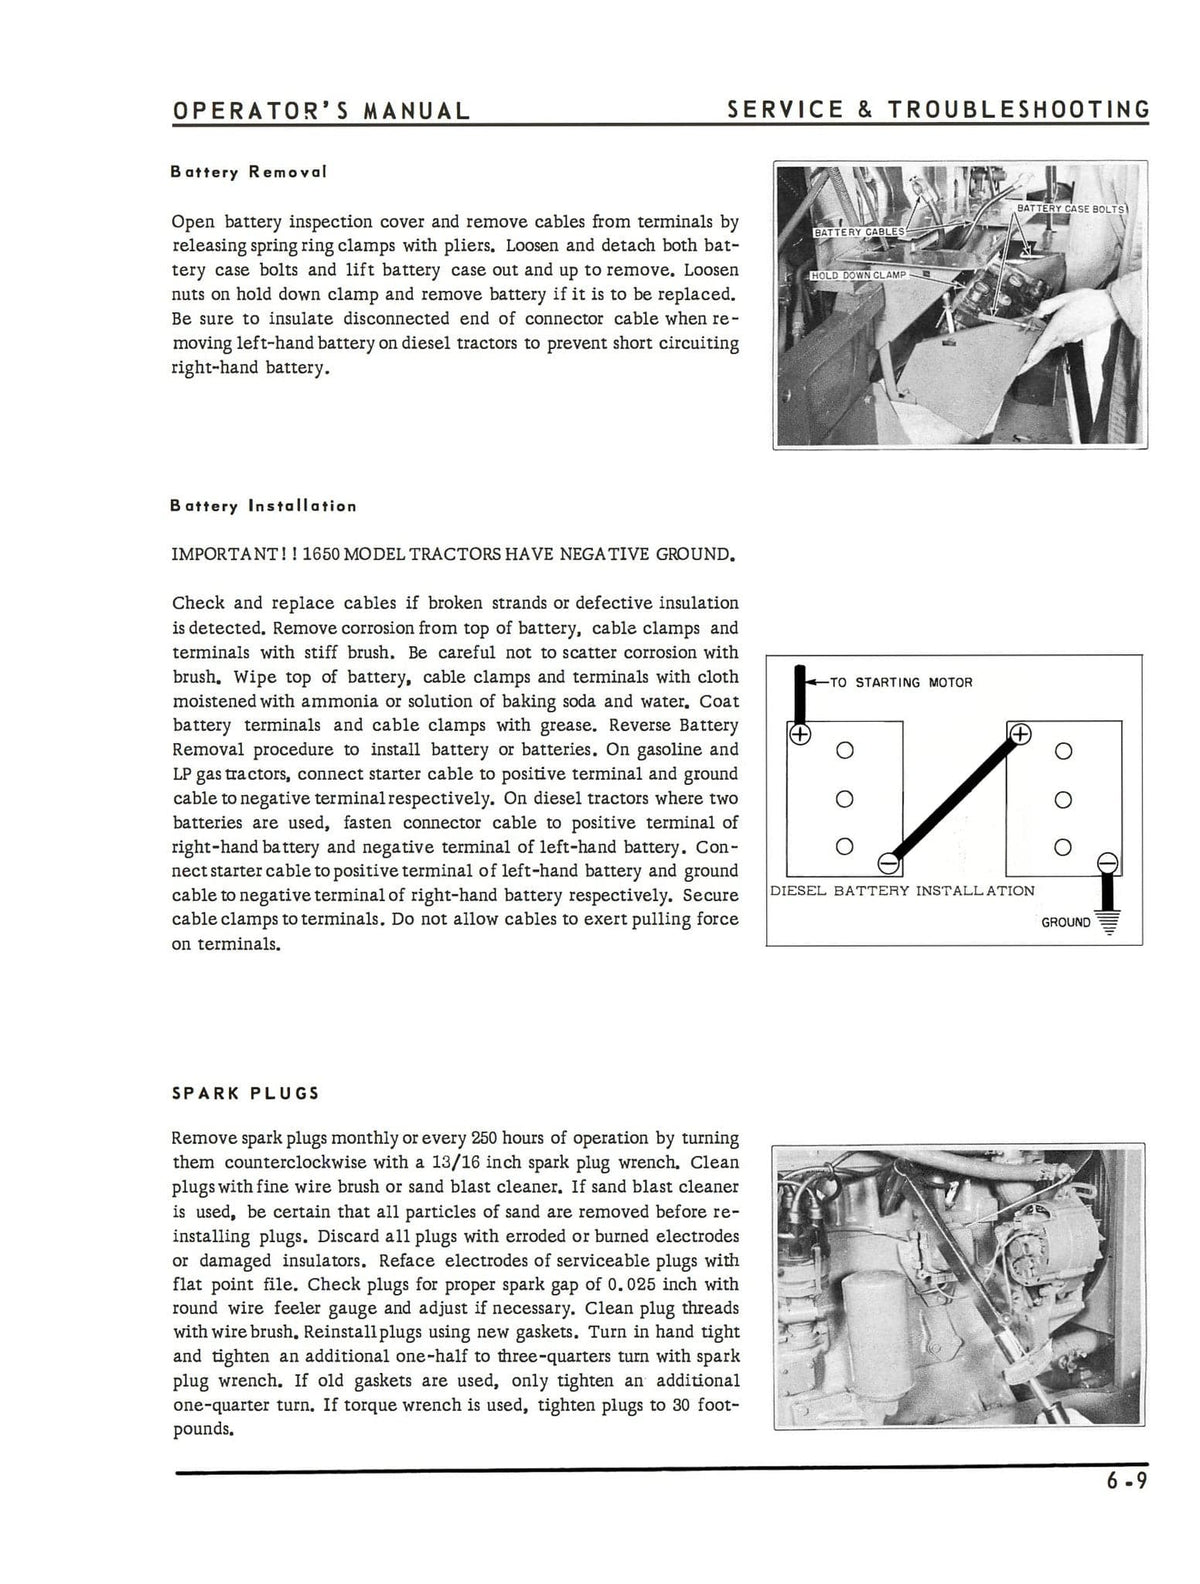 Oliver 1650 Tractor - Operator's Manual - Ag Manuals - A Provider of Digital Farm Manuals - 3